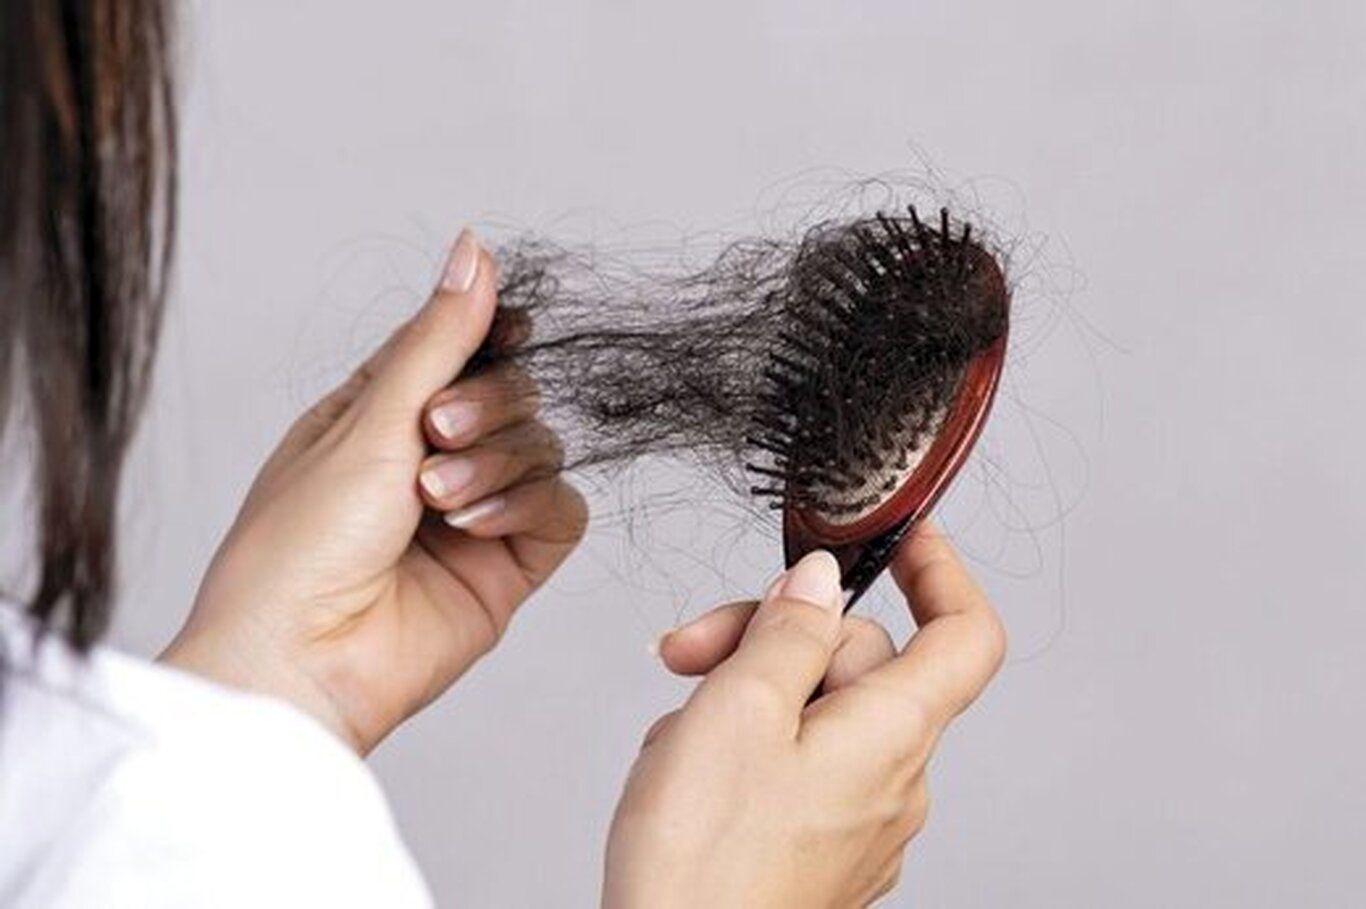 علائم ریزش مو کدامند؟ این ریزش مو مخصوص زنان است